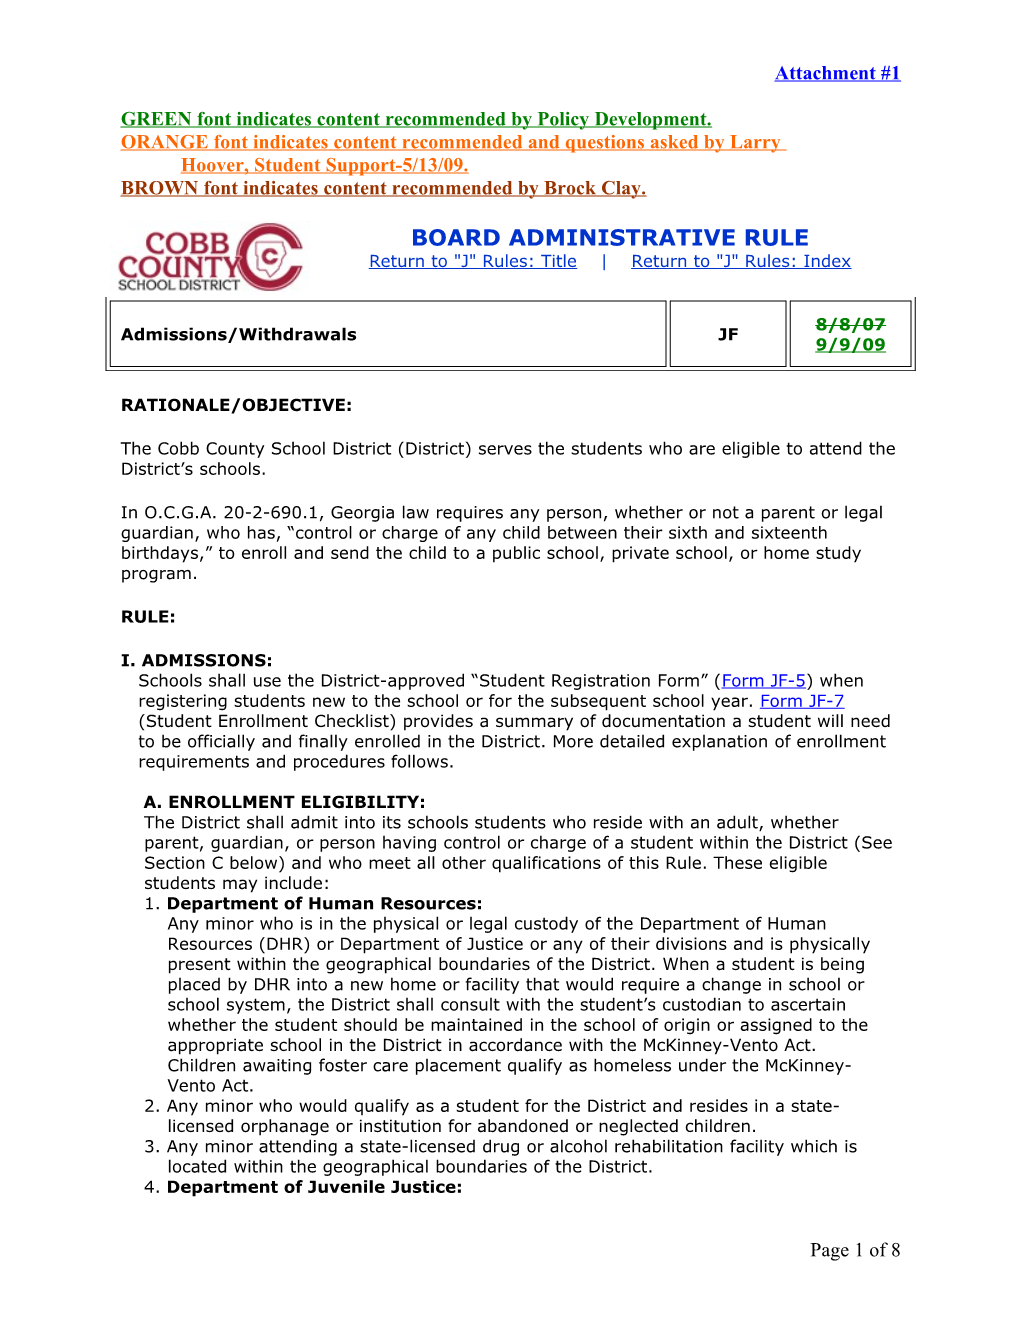 Board Administrative Rule s1